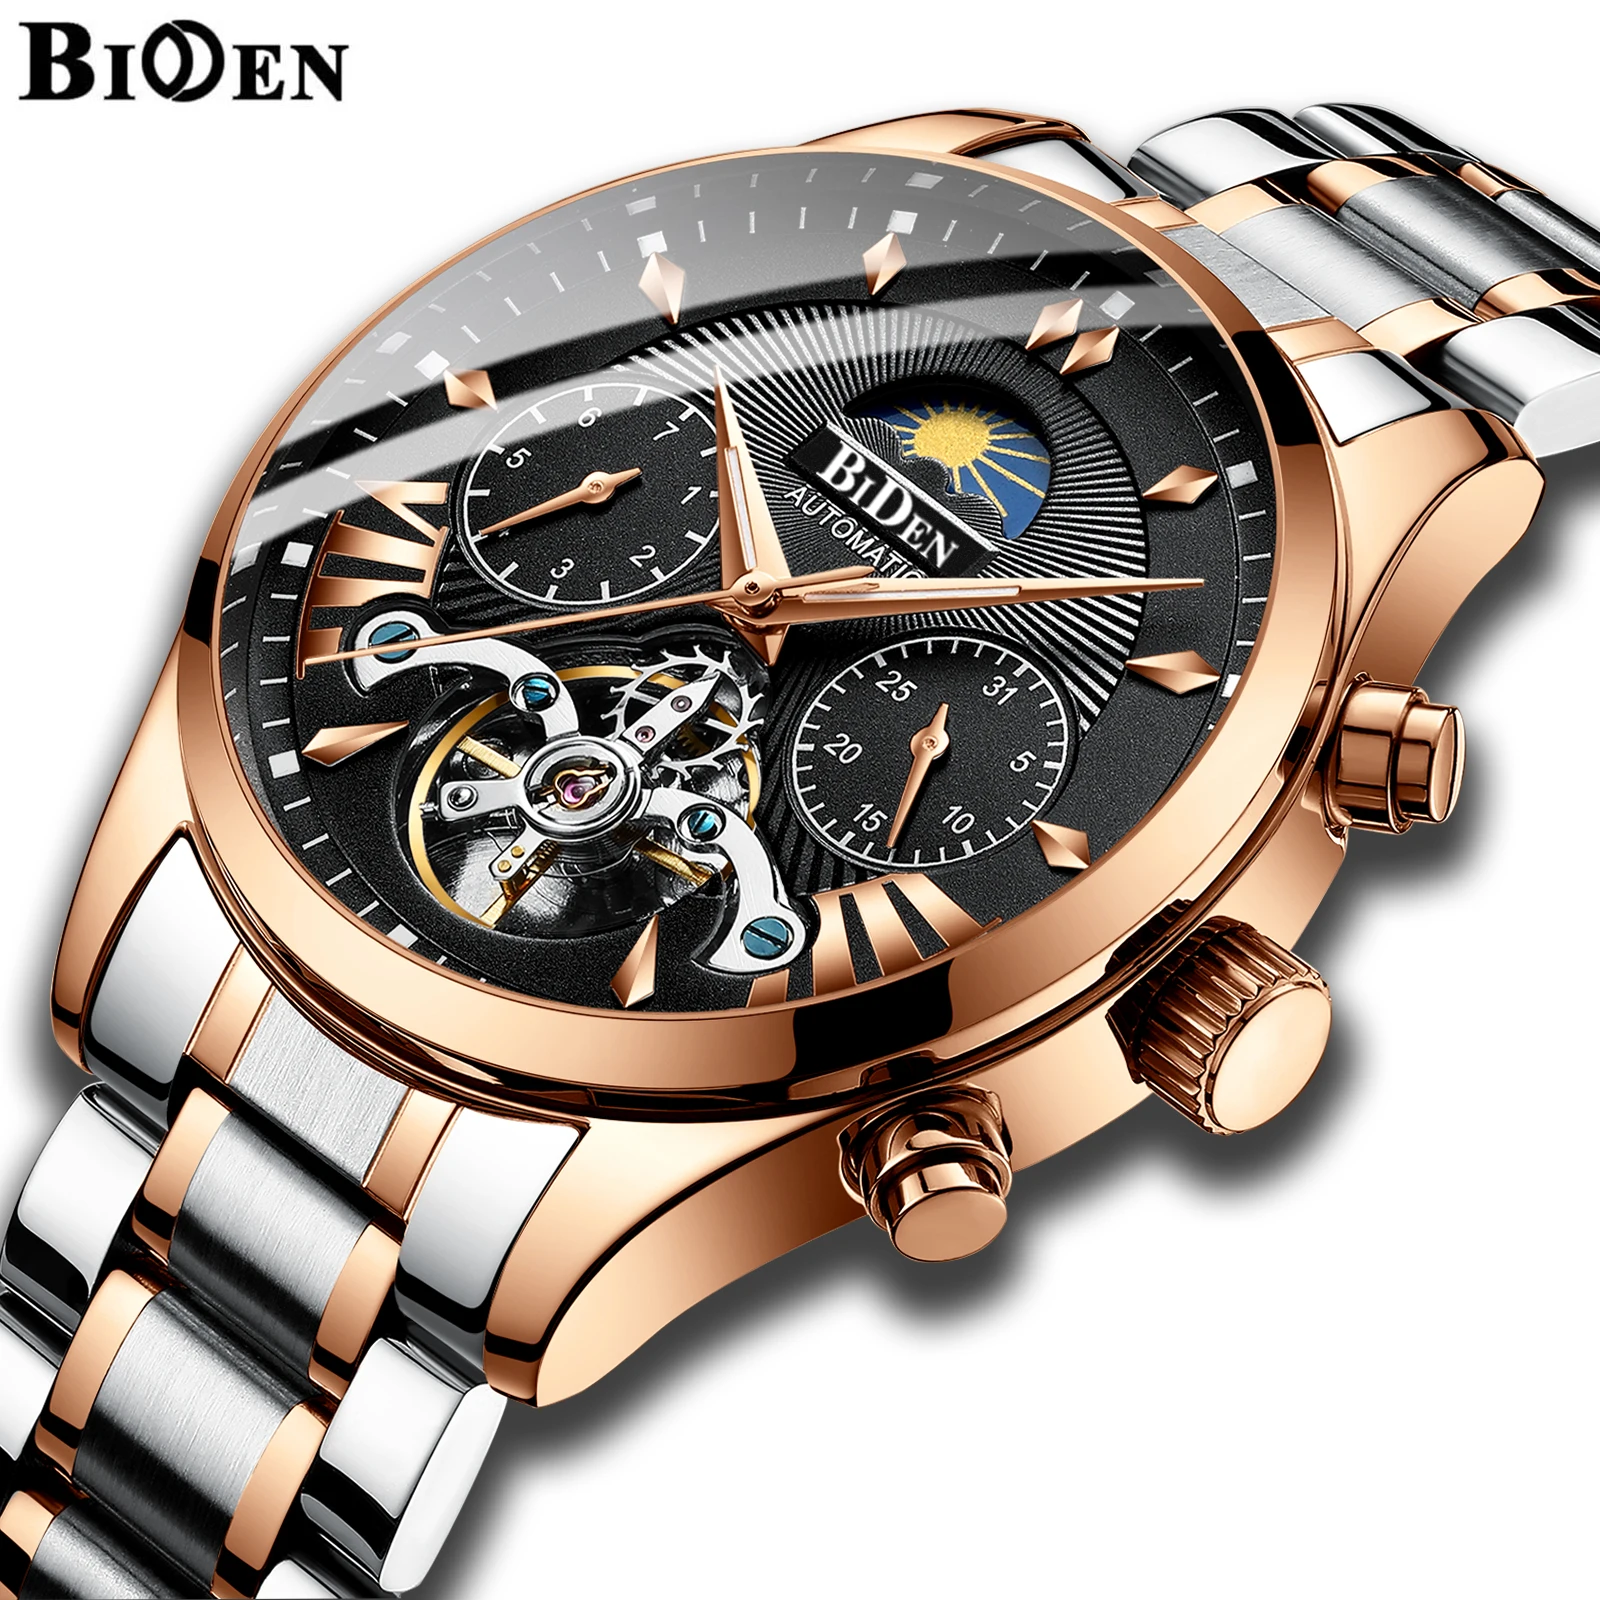 

BIDEN Tourbillon Mechanical Watch Men Luxury Brand Stainless Steel Men Automatic Skeleton Watch Male Clock relogio masculino